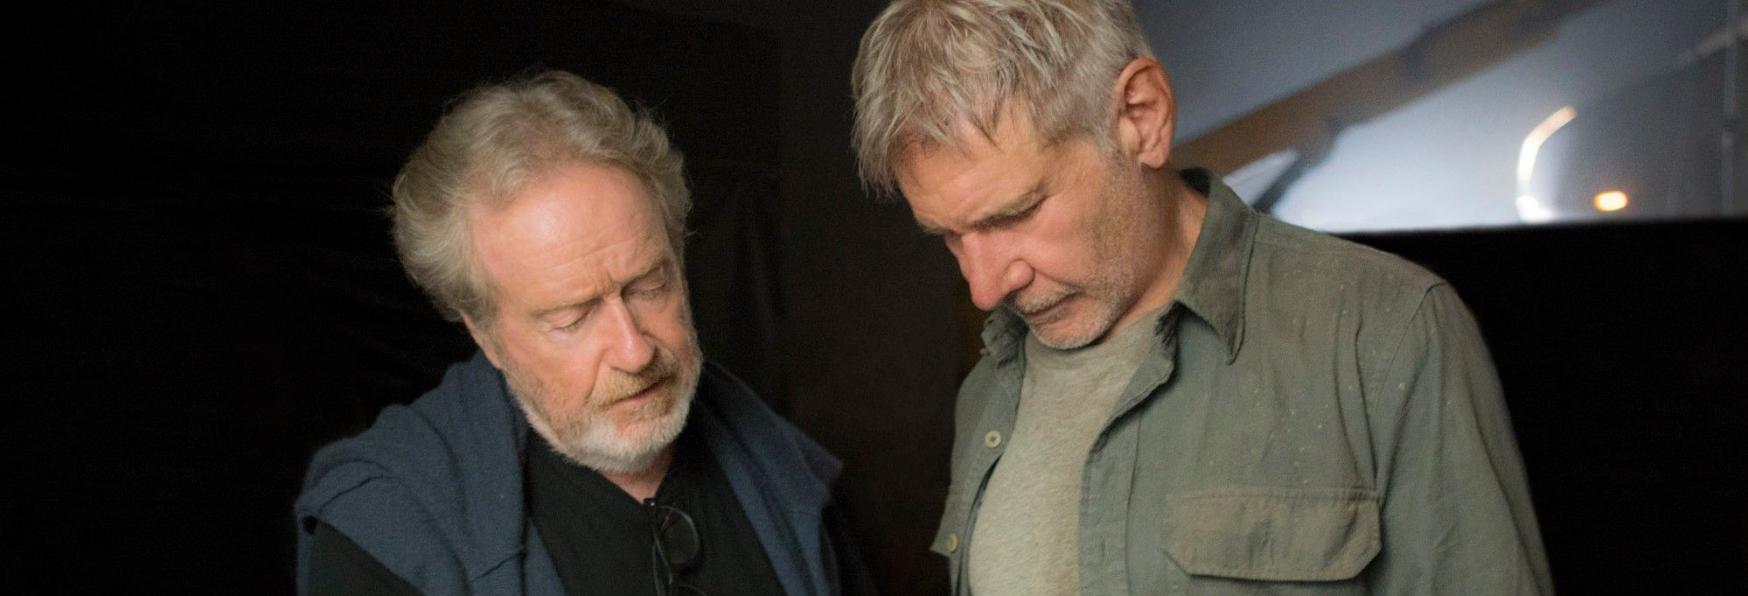 Blade Runner e Alien: Ridley Scott conferma la Produzione di due Serie TV basate sui Film